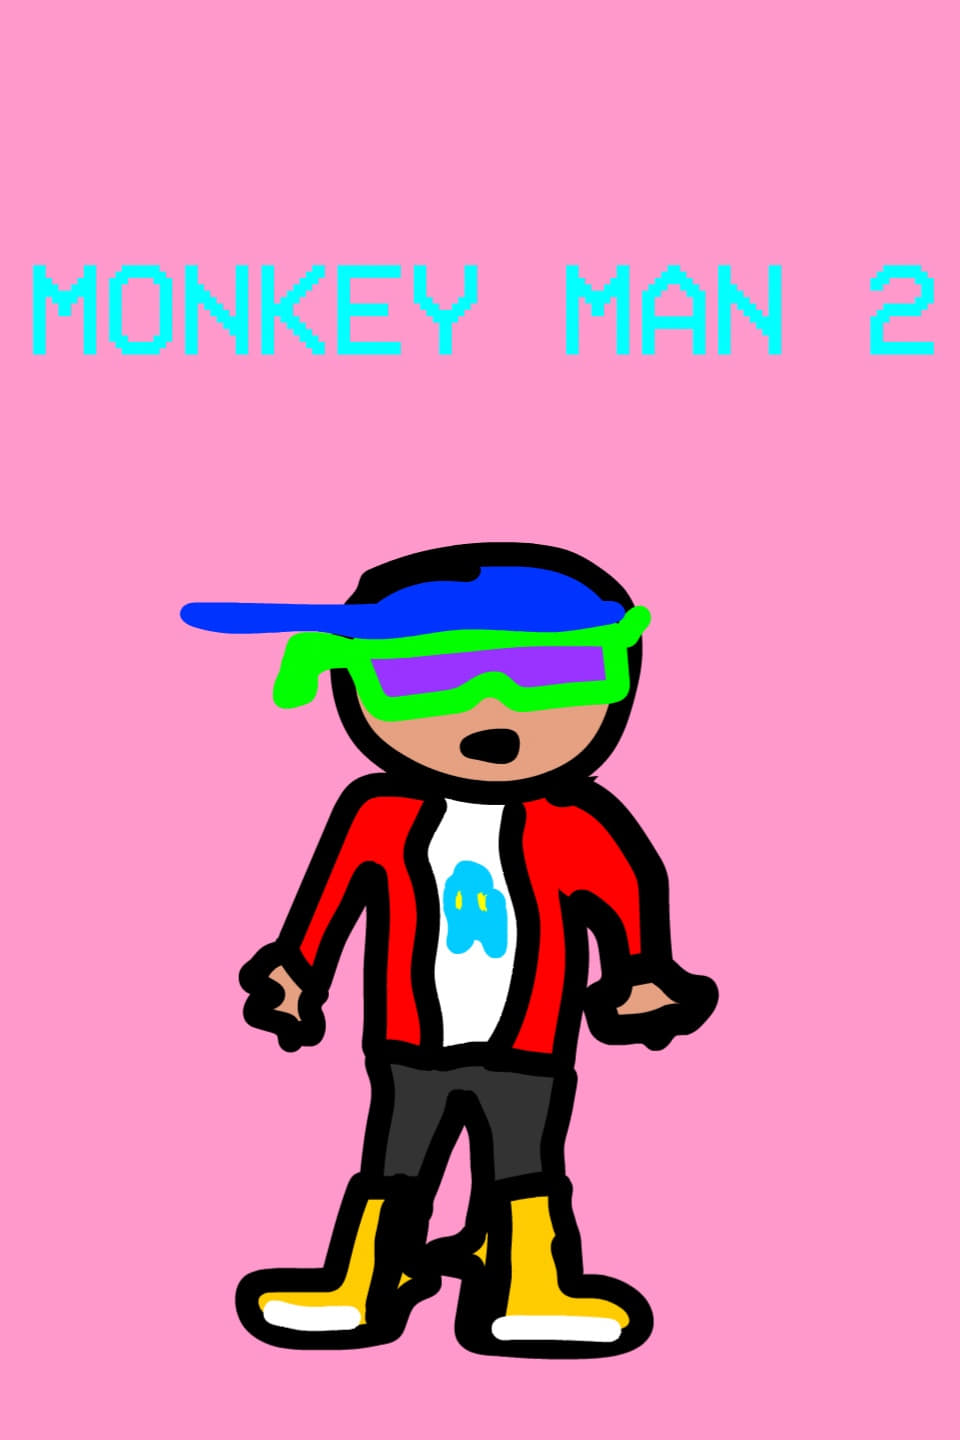 Monkey Man 2